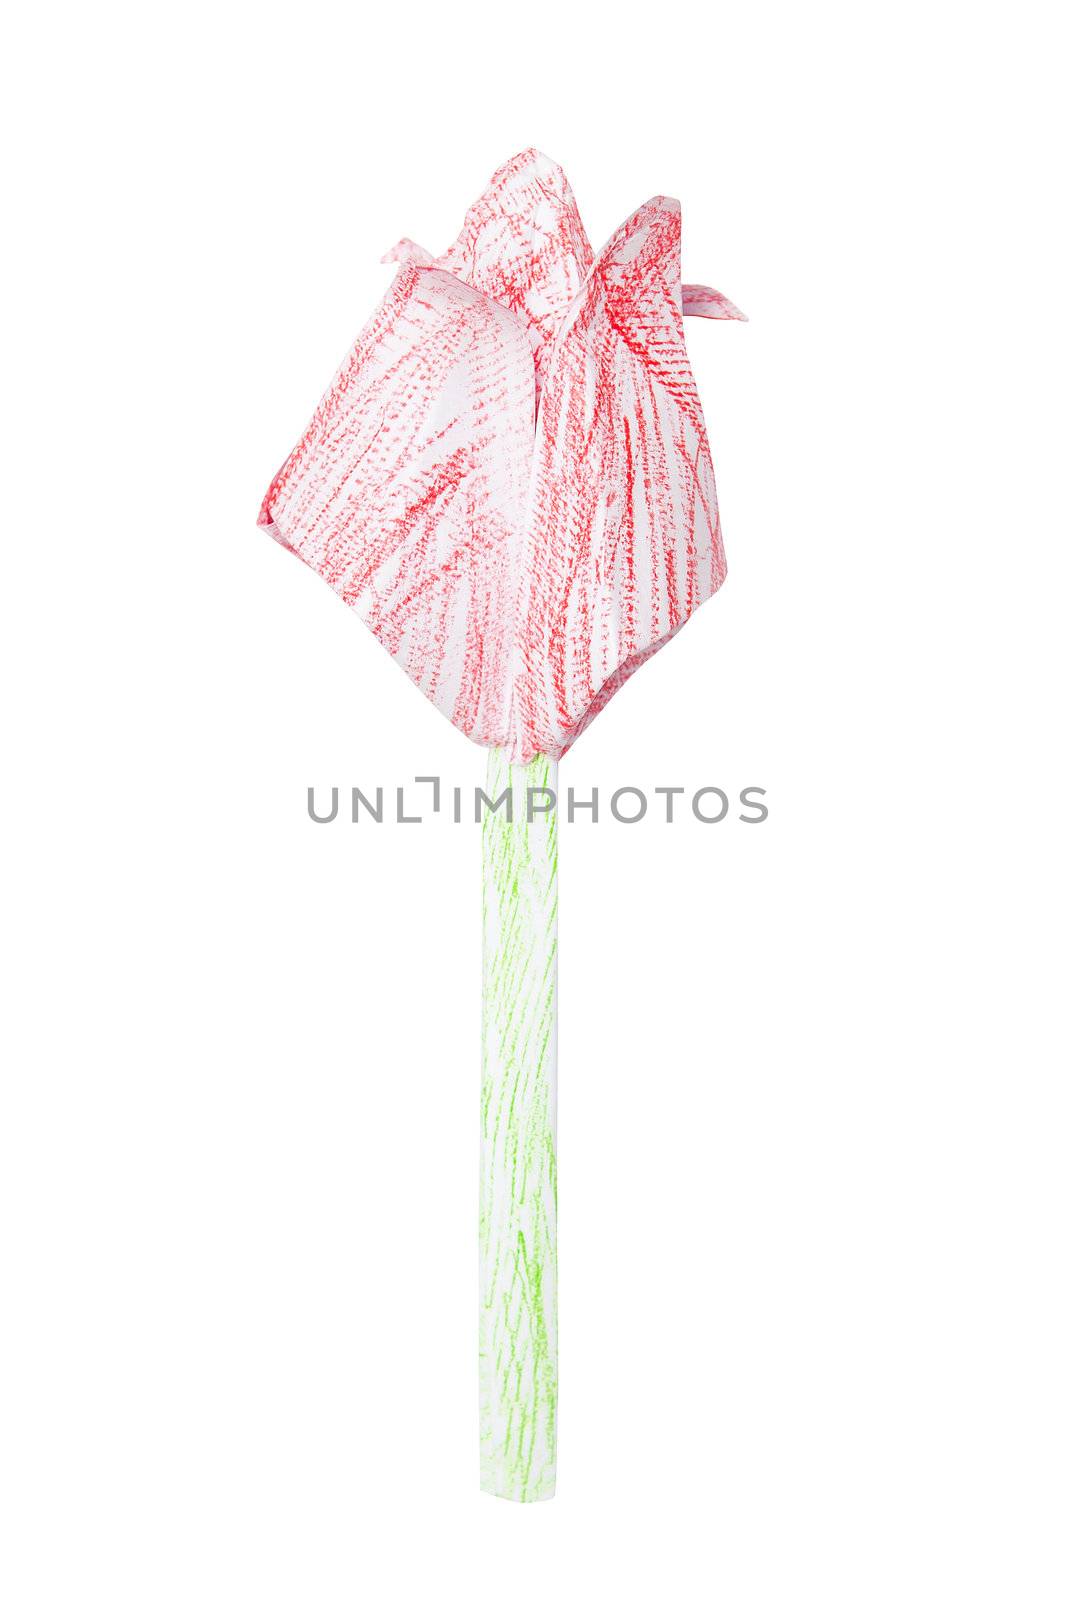 Origami tulip isolated on the white background